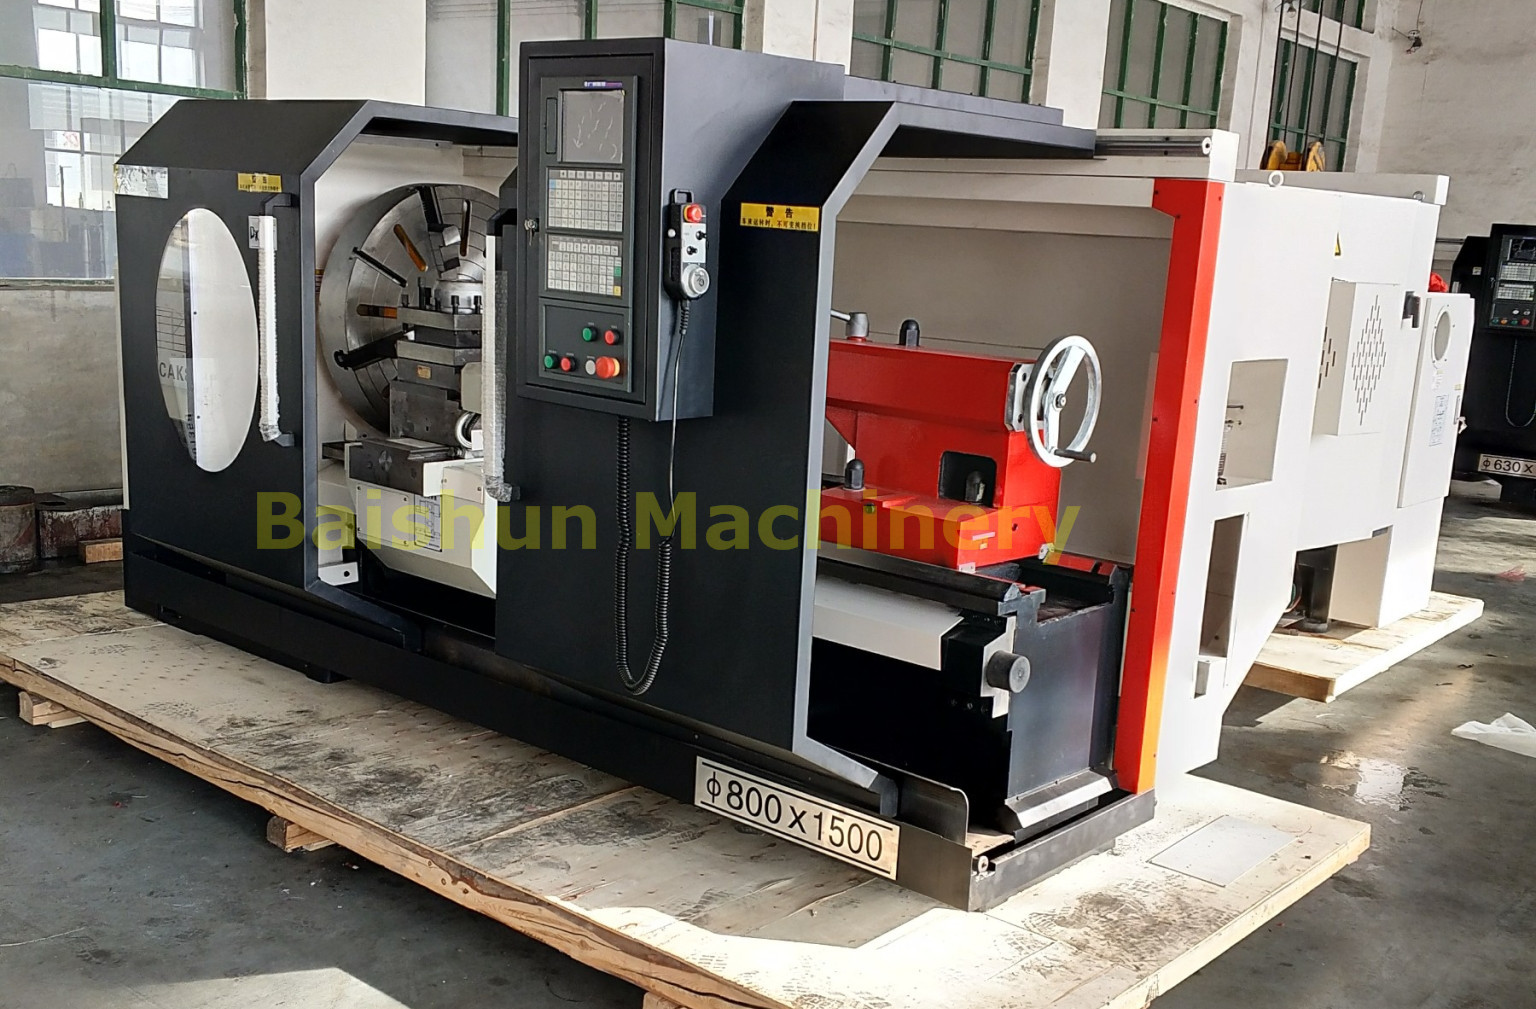  CAK 80135 Horizontal Flat Bed CNC Lathe Machine , CNC Precision Lathe Machine Manufactures